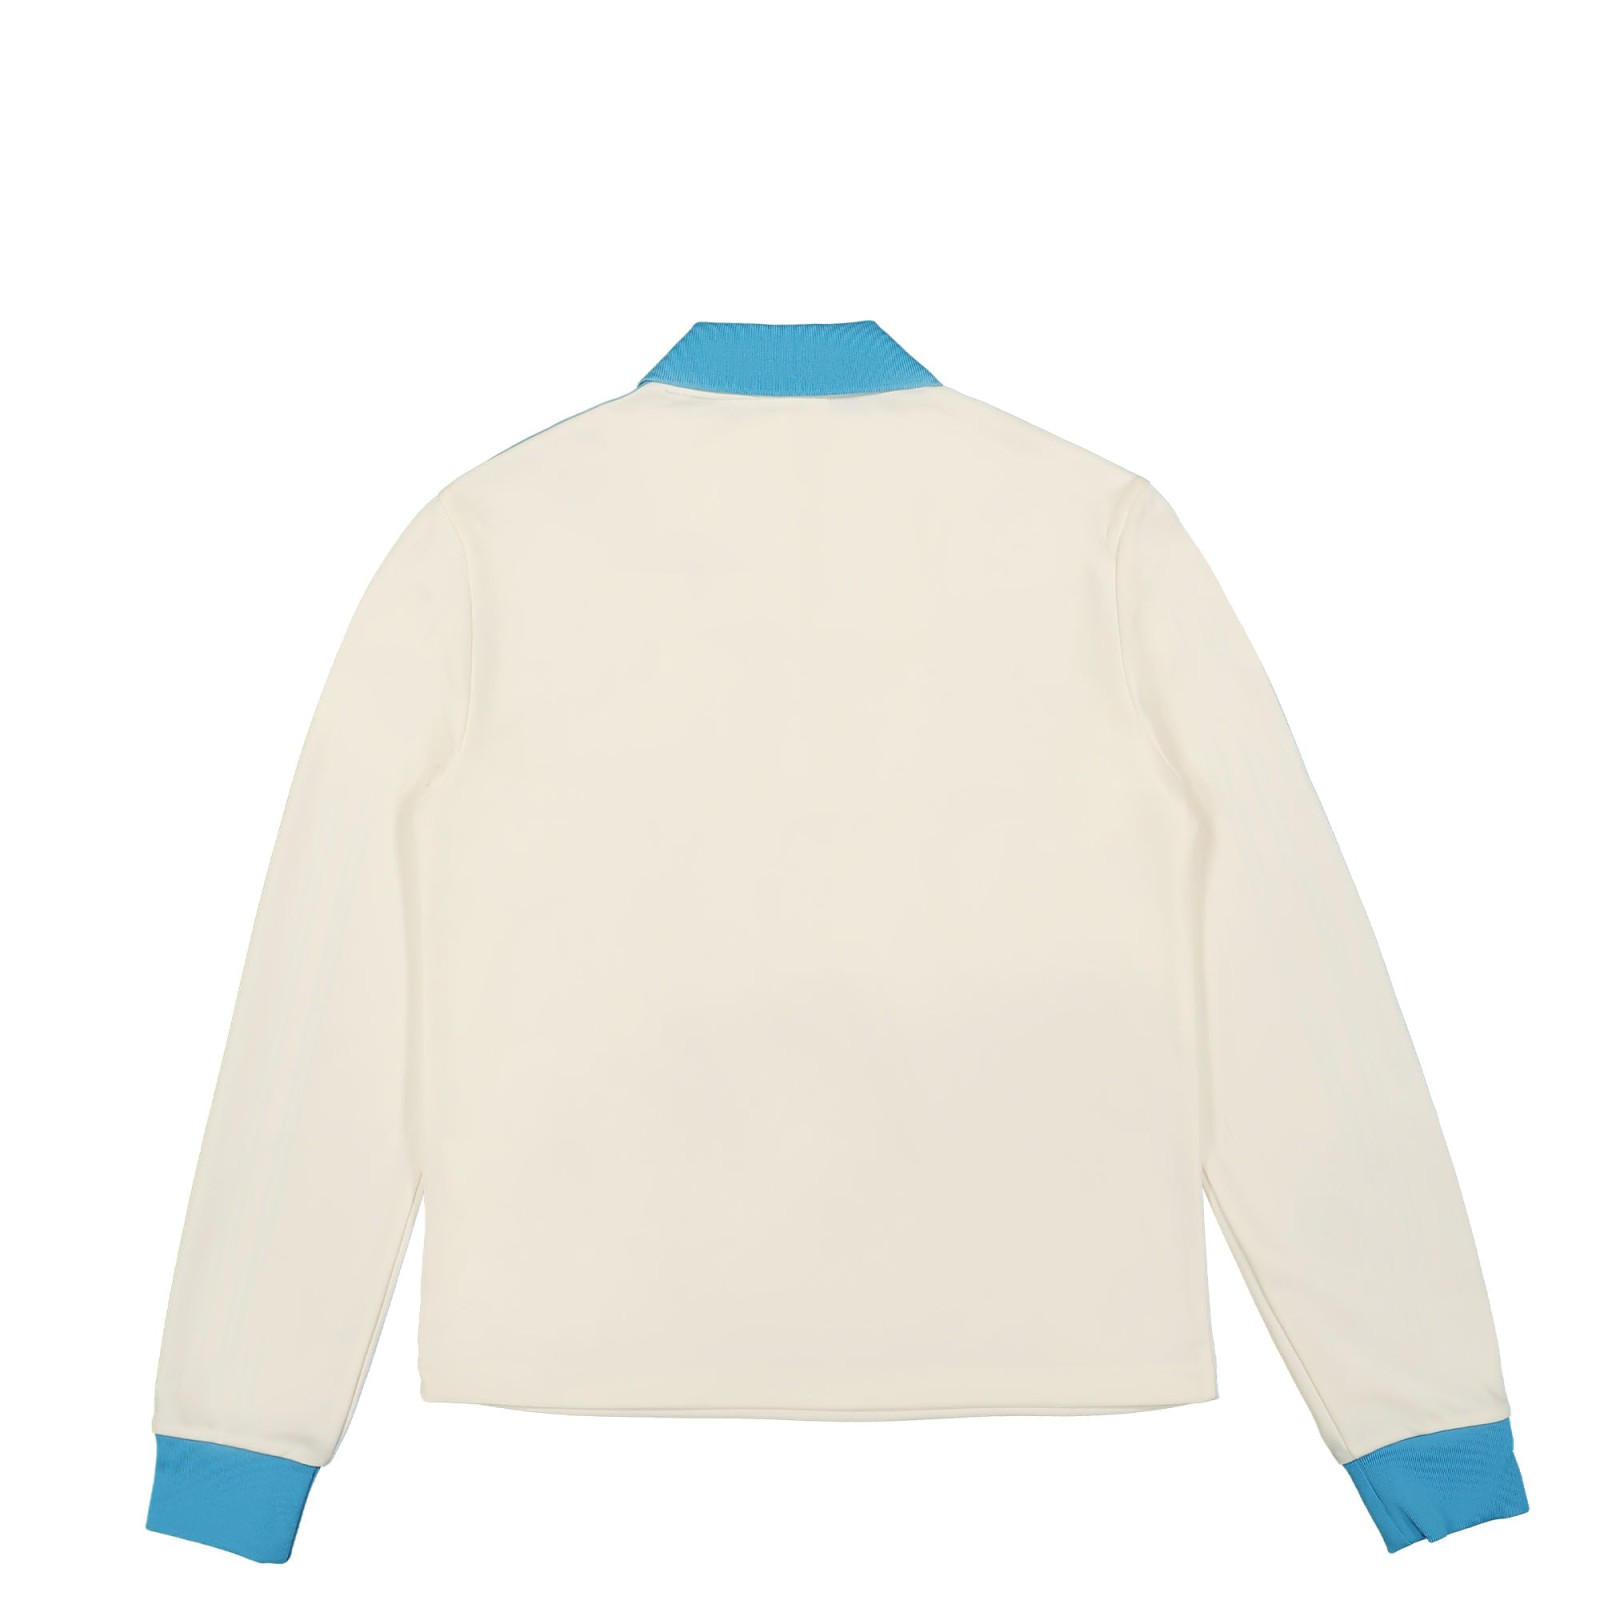 SPORTY & RICH x Adidas
LS Soccer Jersey
Cream White